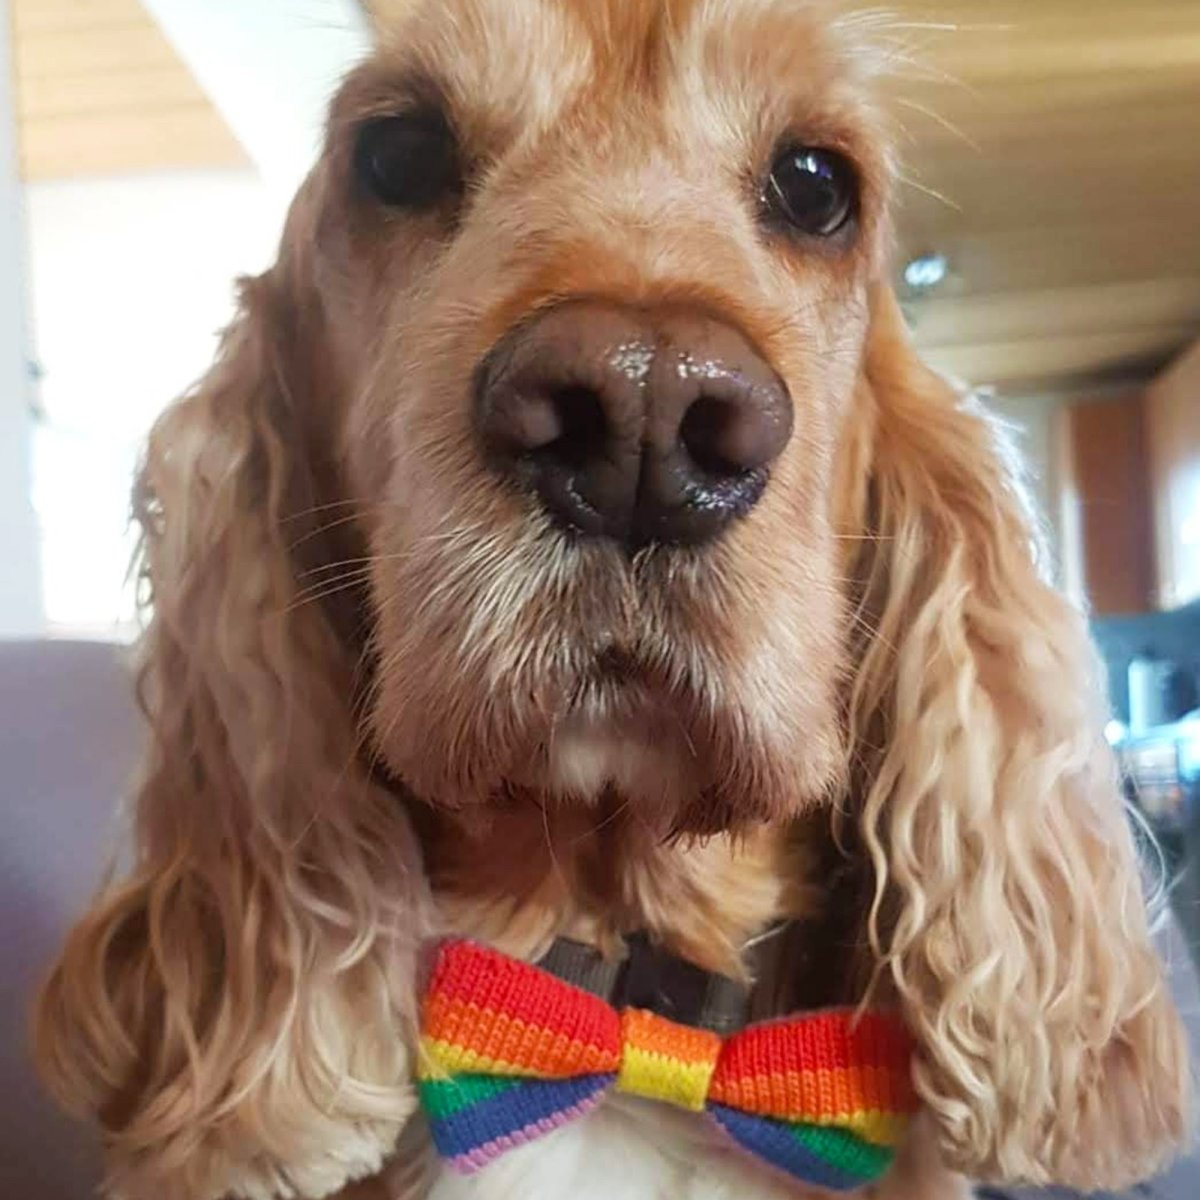 Rainbow / PRIDE Dog Bowtie: Small - Medium Dog - Wool & Water